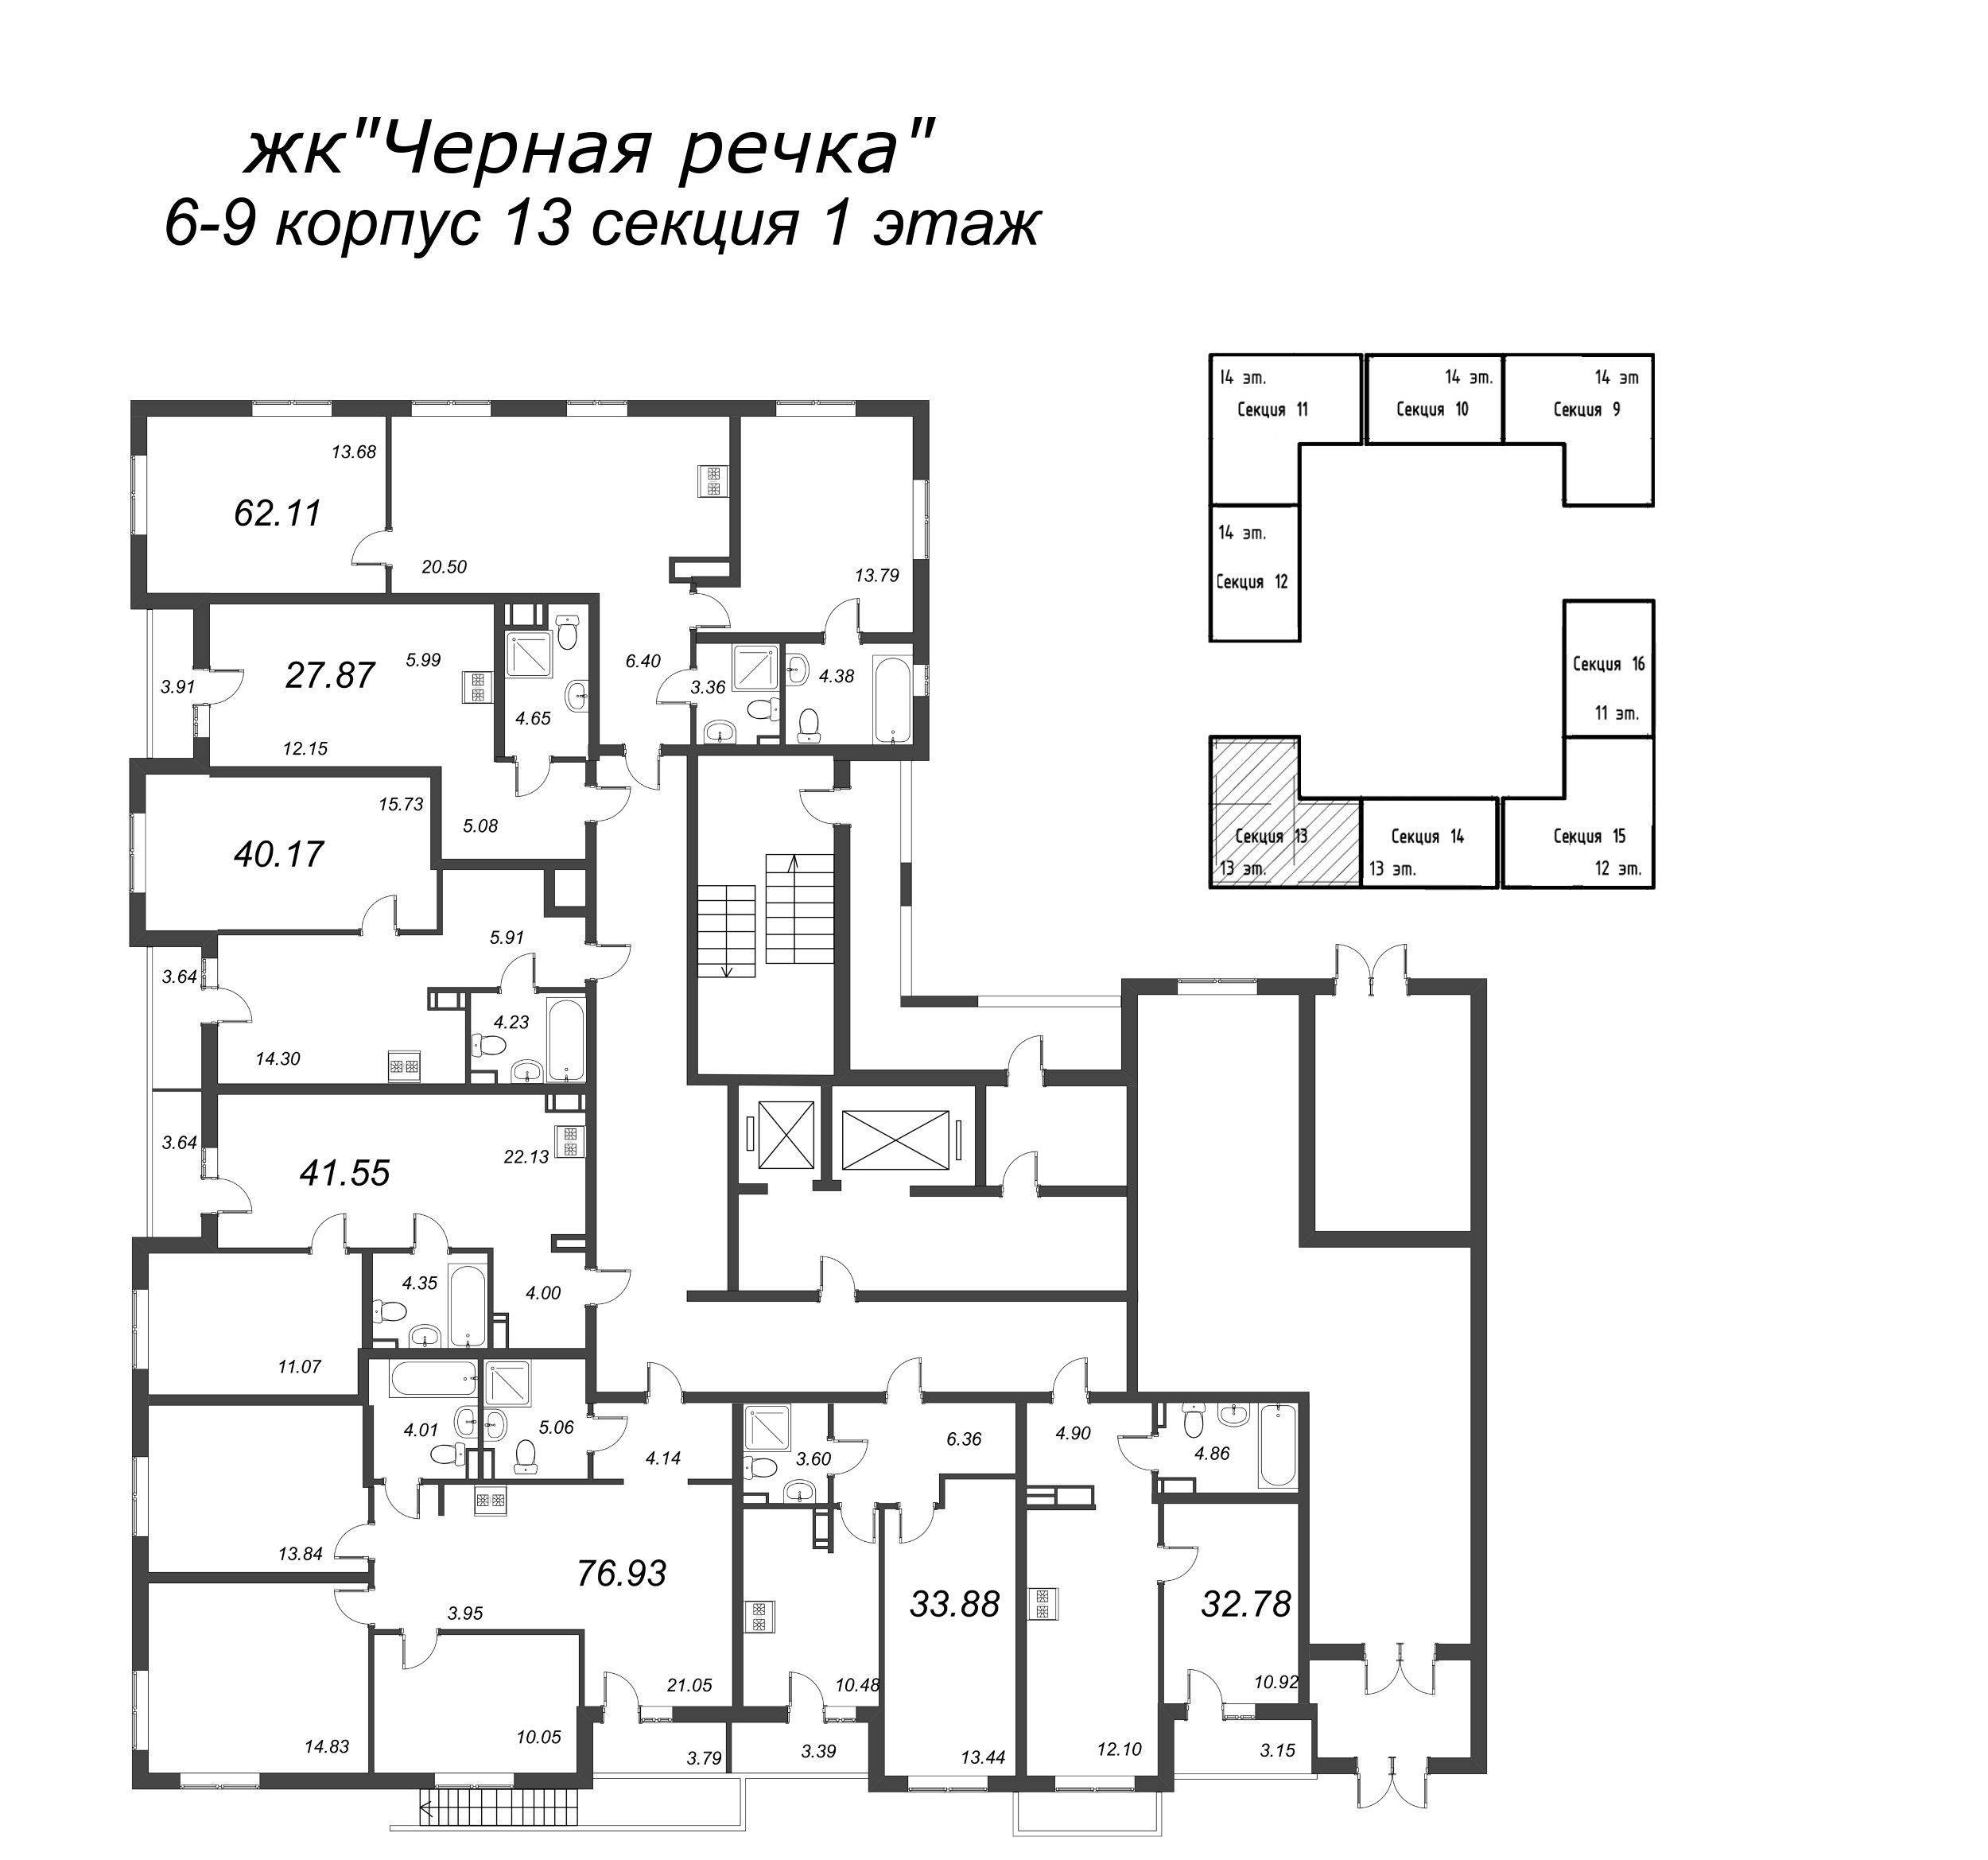 4-комнатная (Евро) квартира, 76.93 м² - планировка этажа